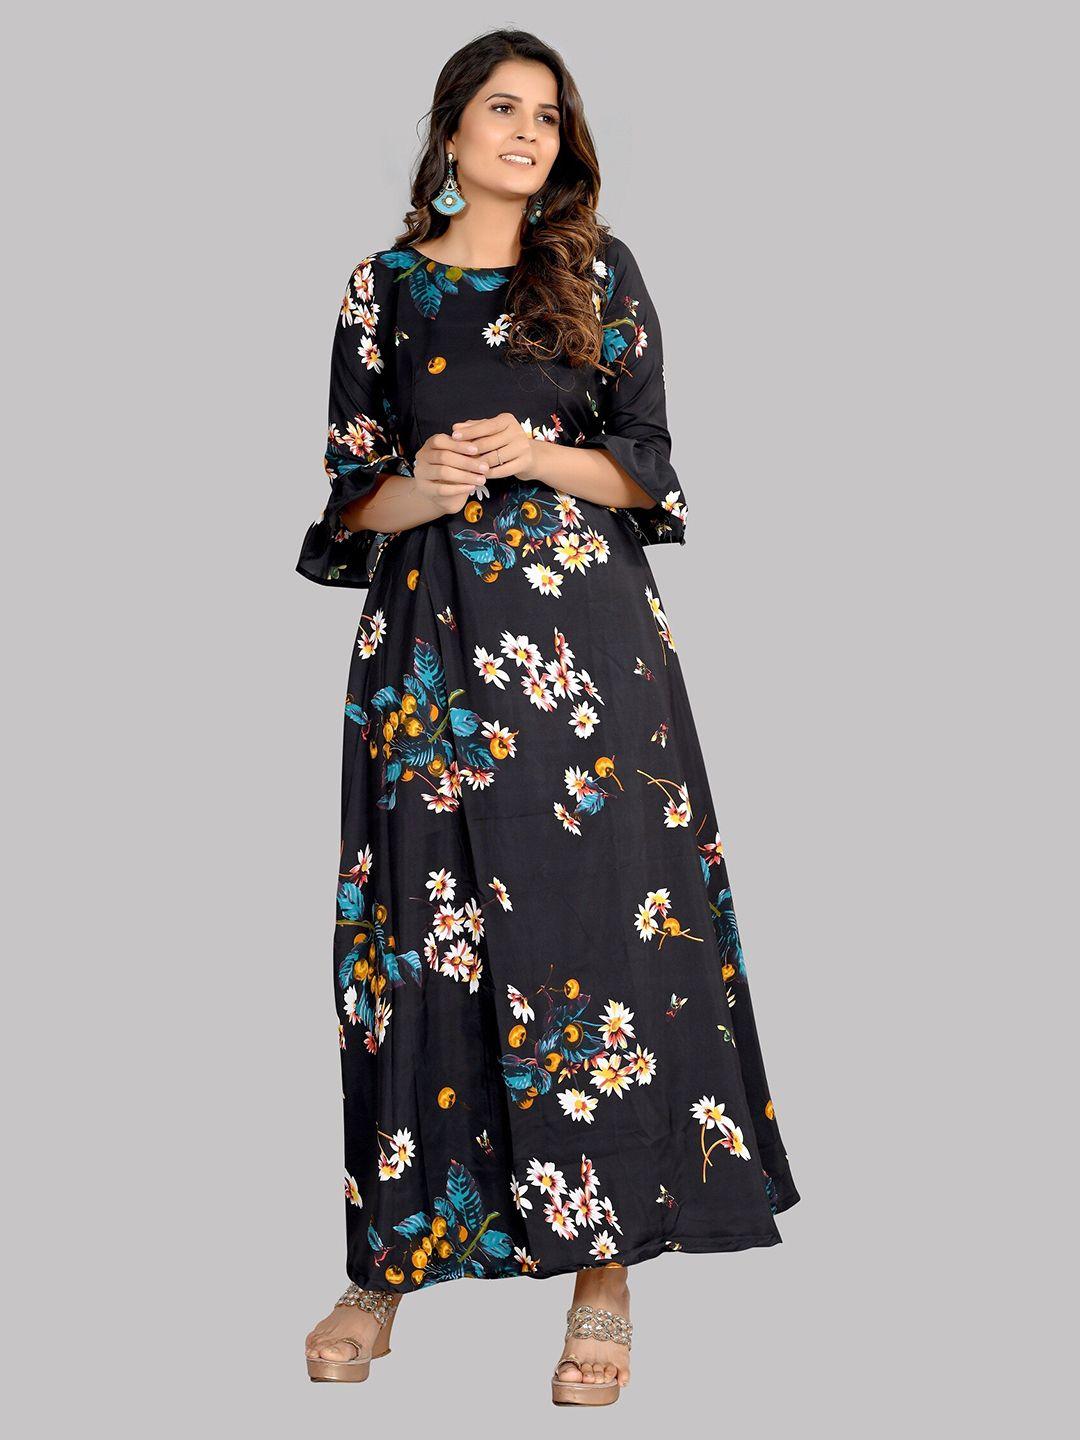 aucreations black & blue floral crepe belted maxi dress